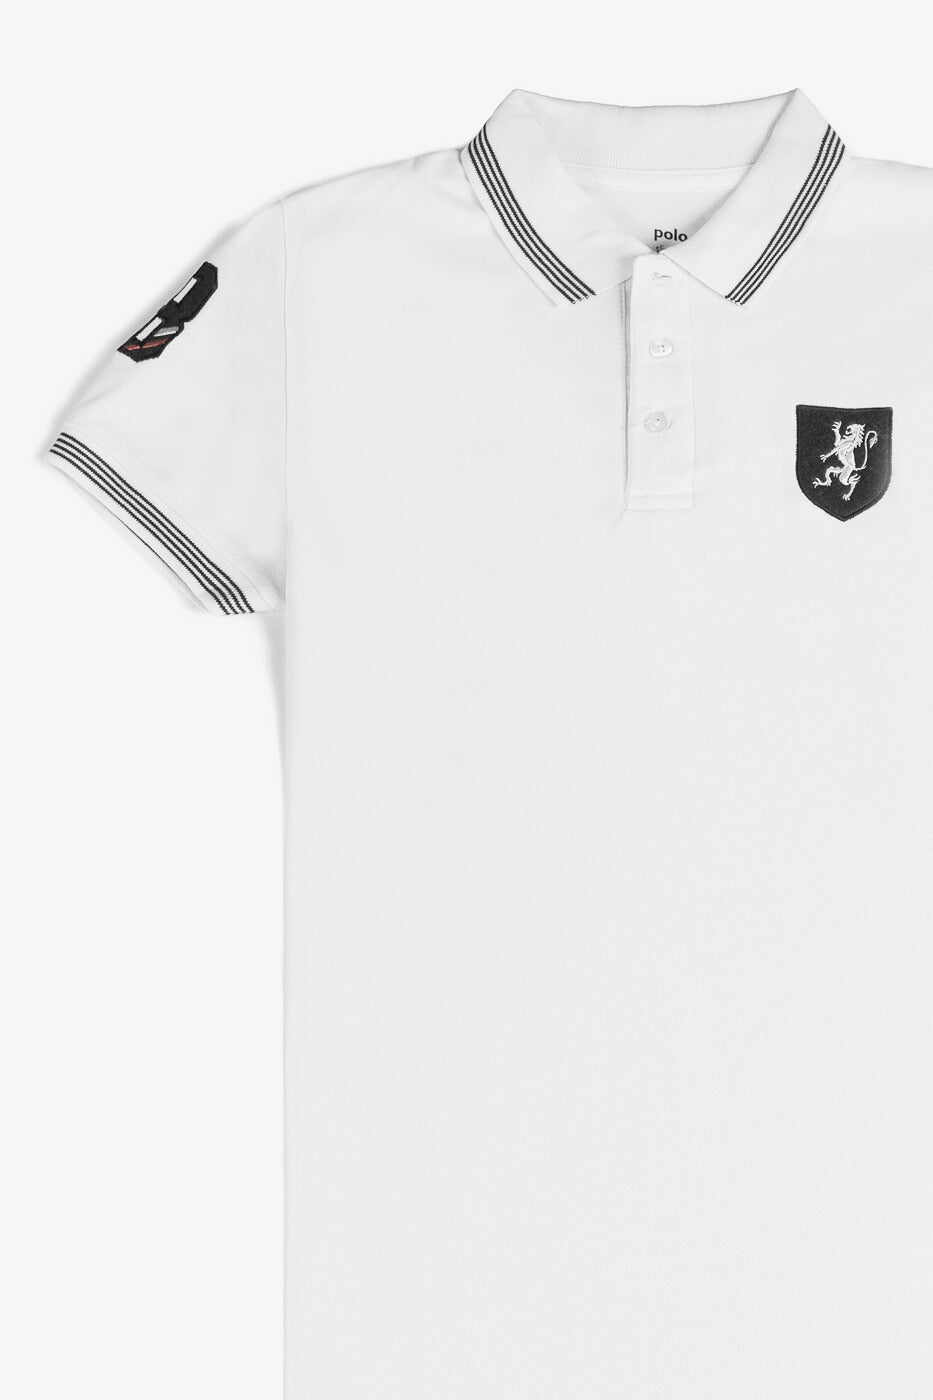 GRDNO Premium Imported Polo Shirt - White